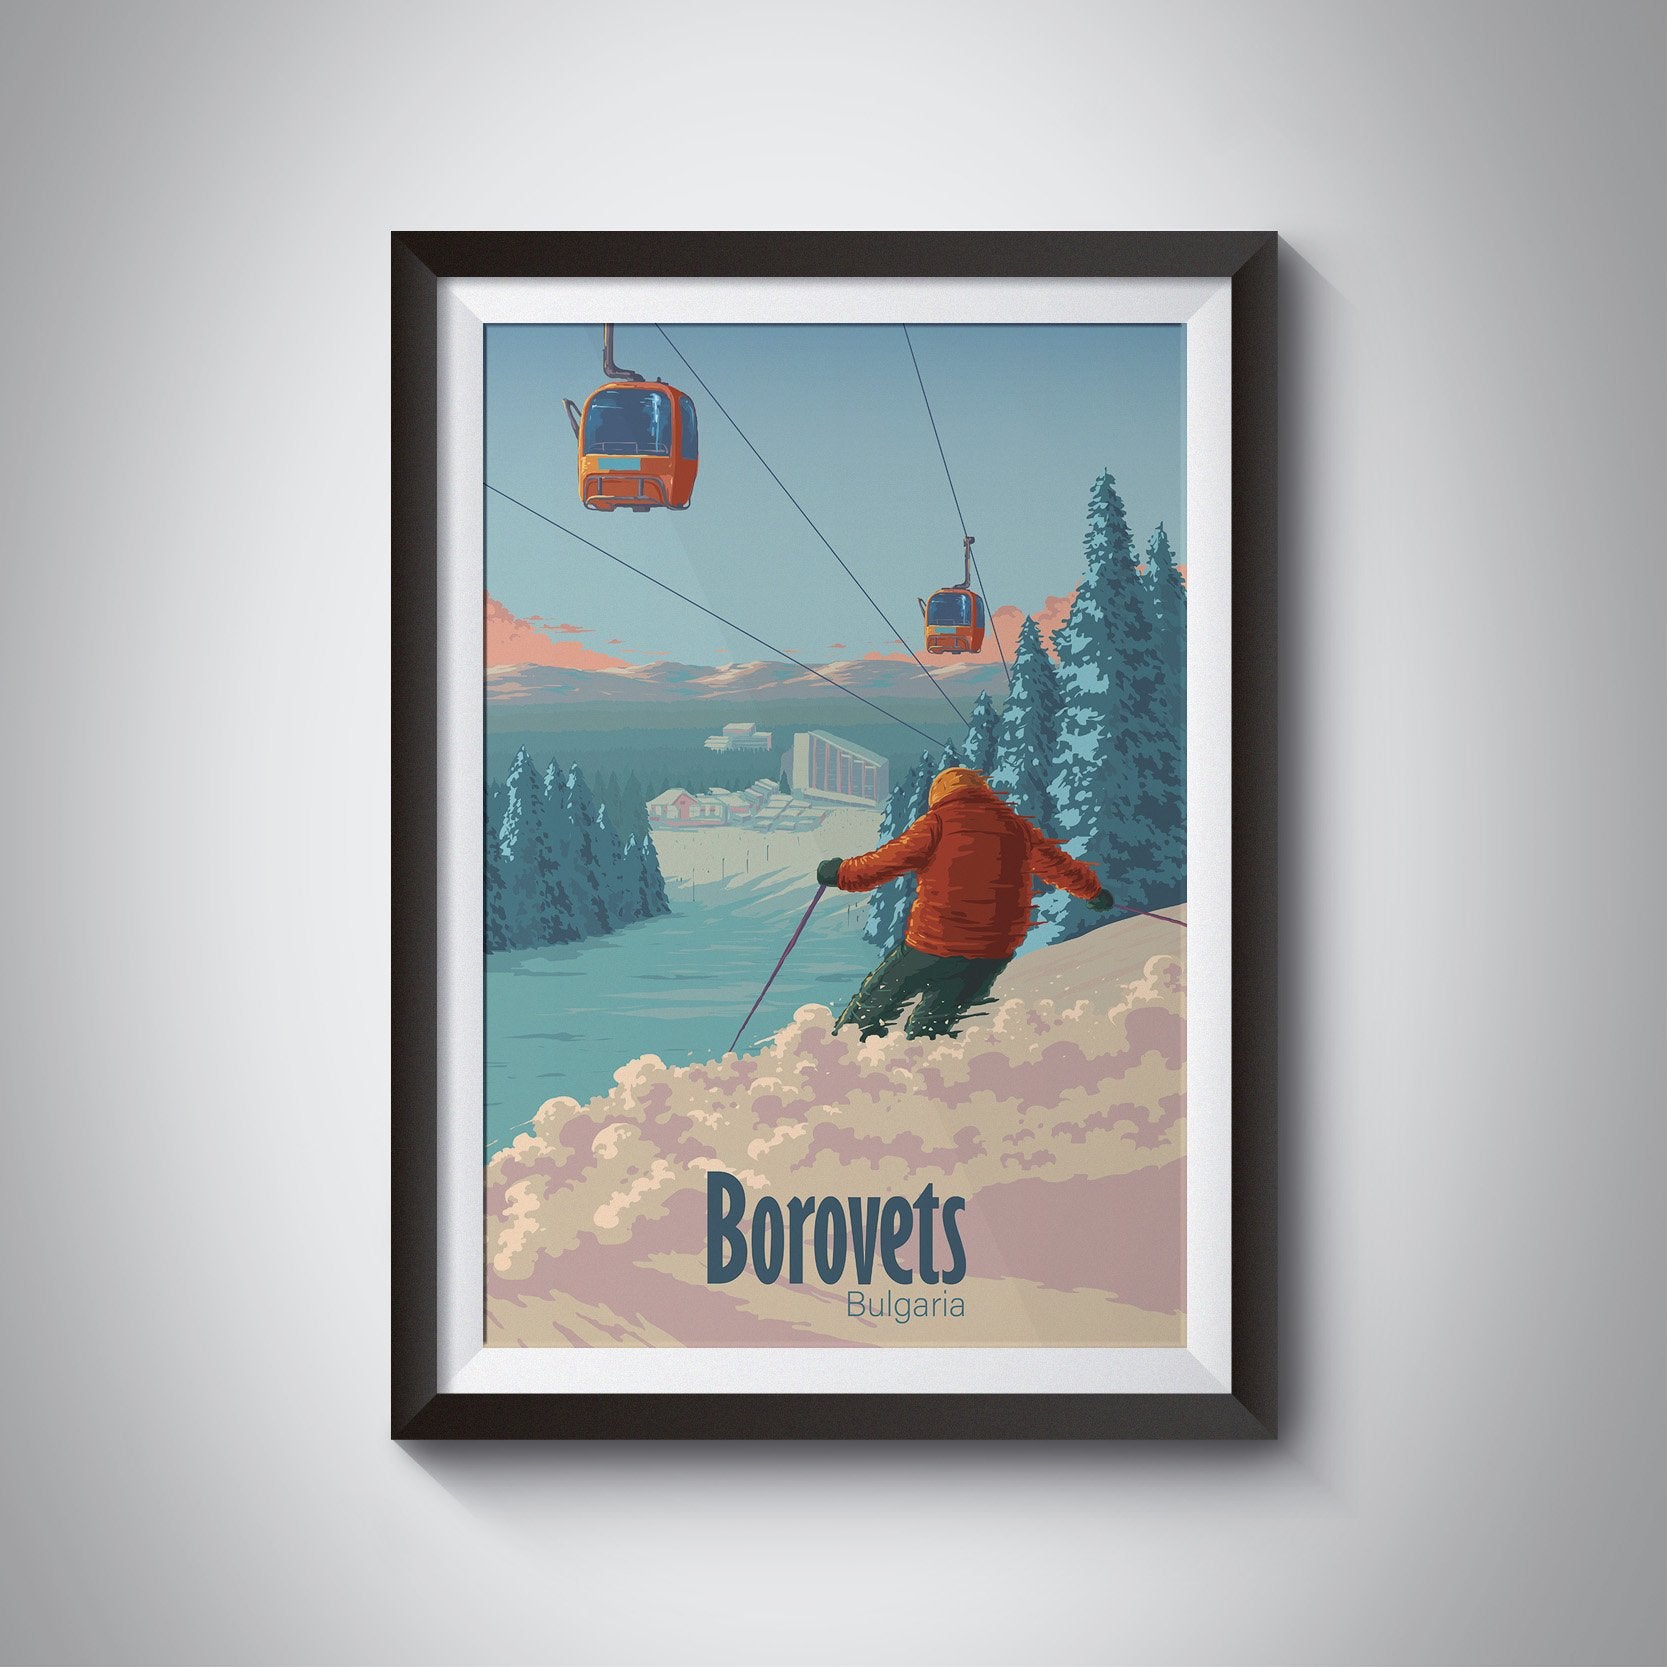 Borovets Bulgaria Ski Resort Travel Poster